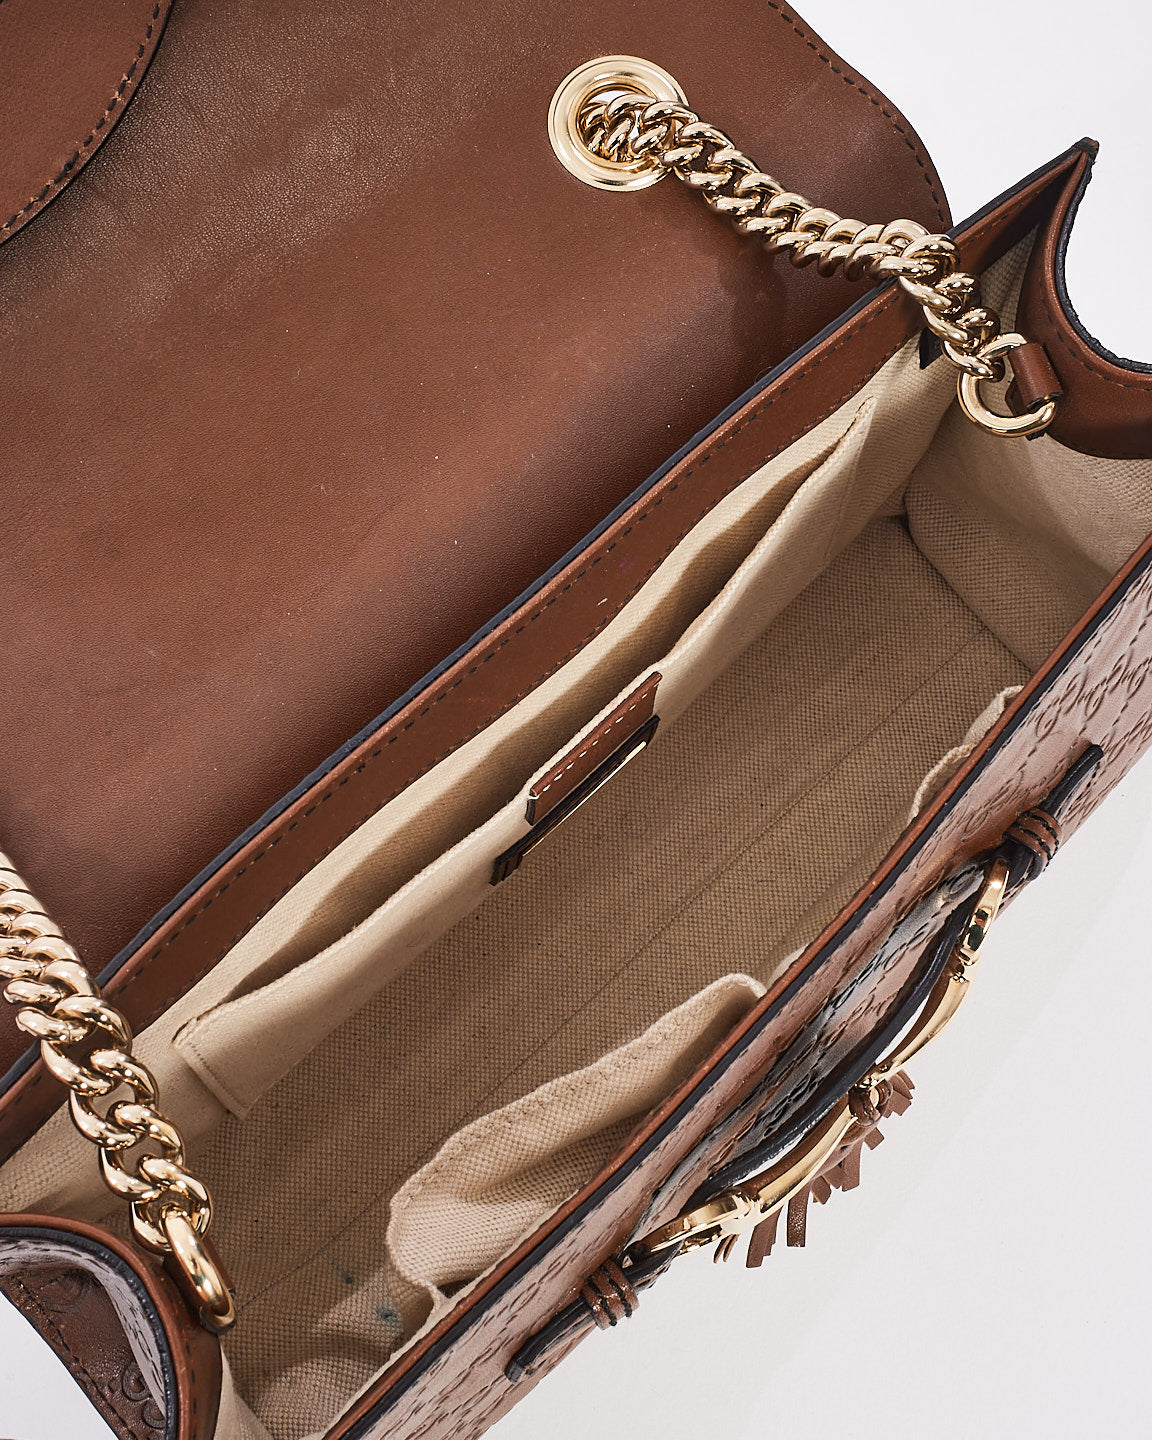 Gucci Brown Monogram Signature GG Leather Medium Emily Shoulder Bag